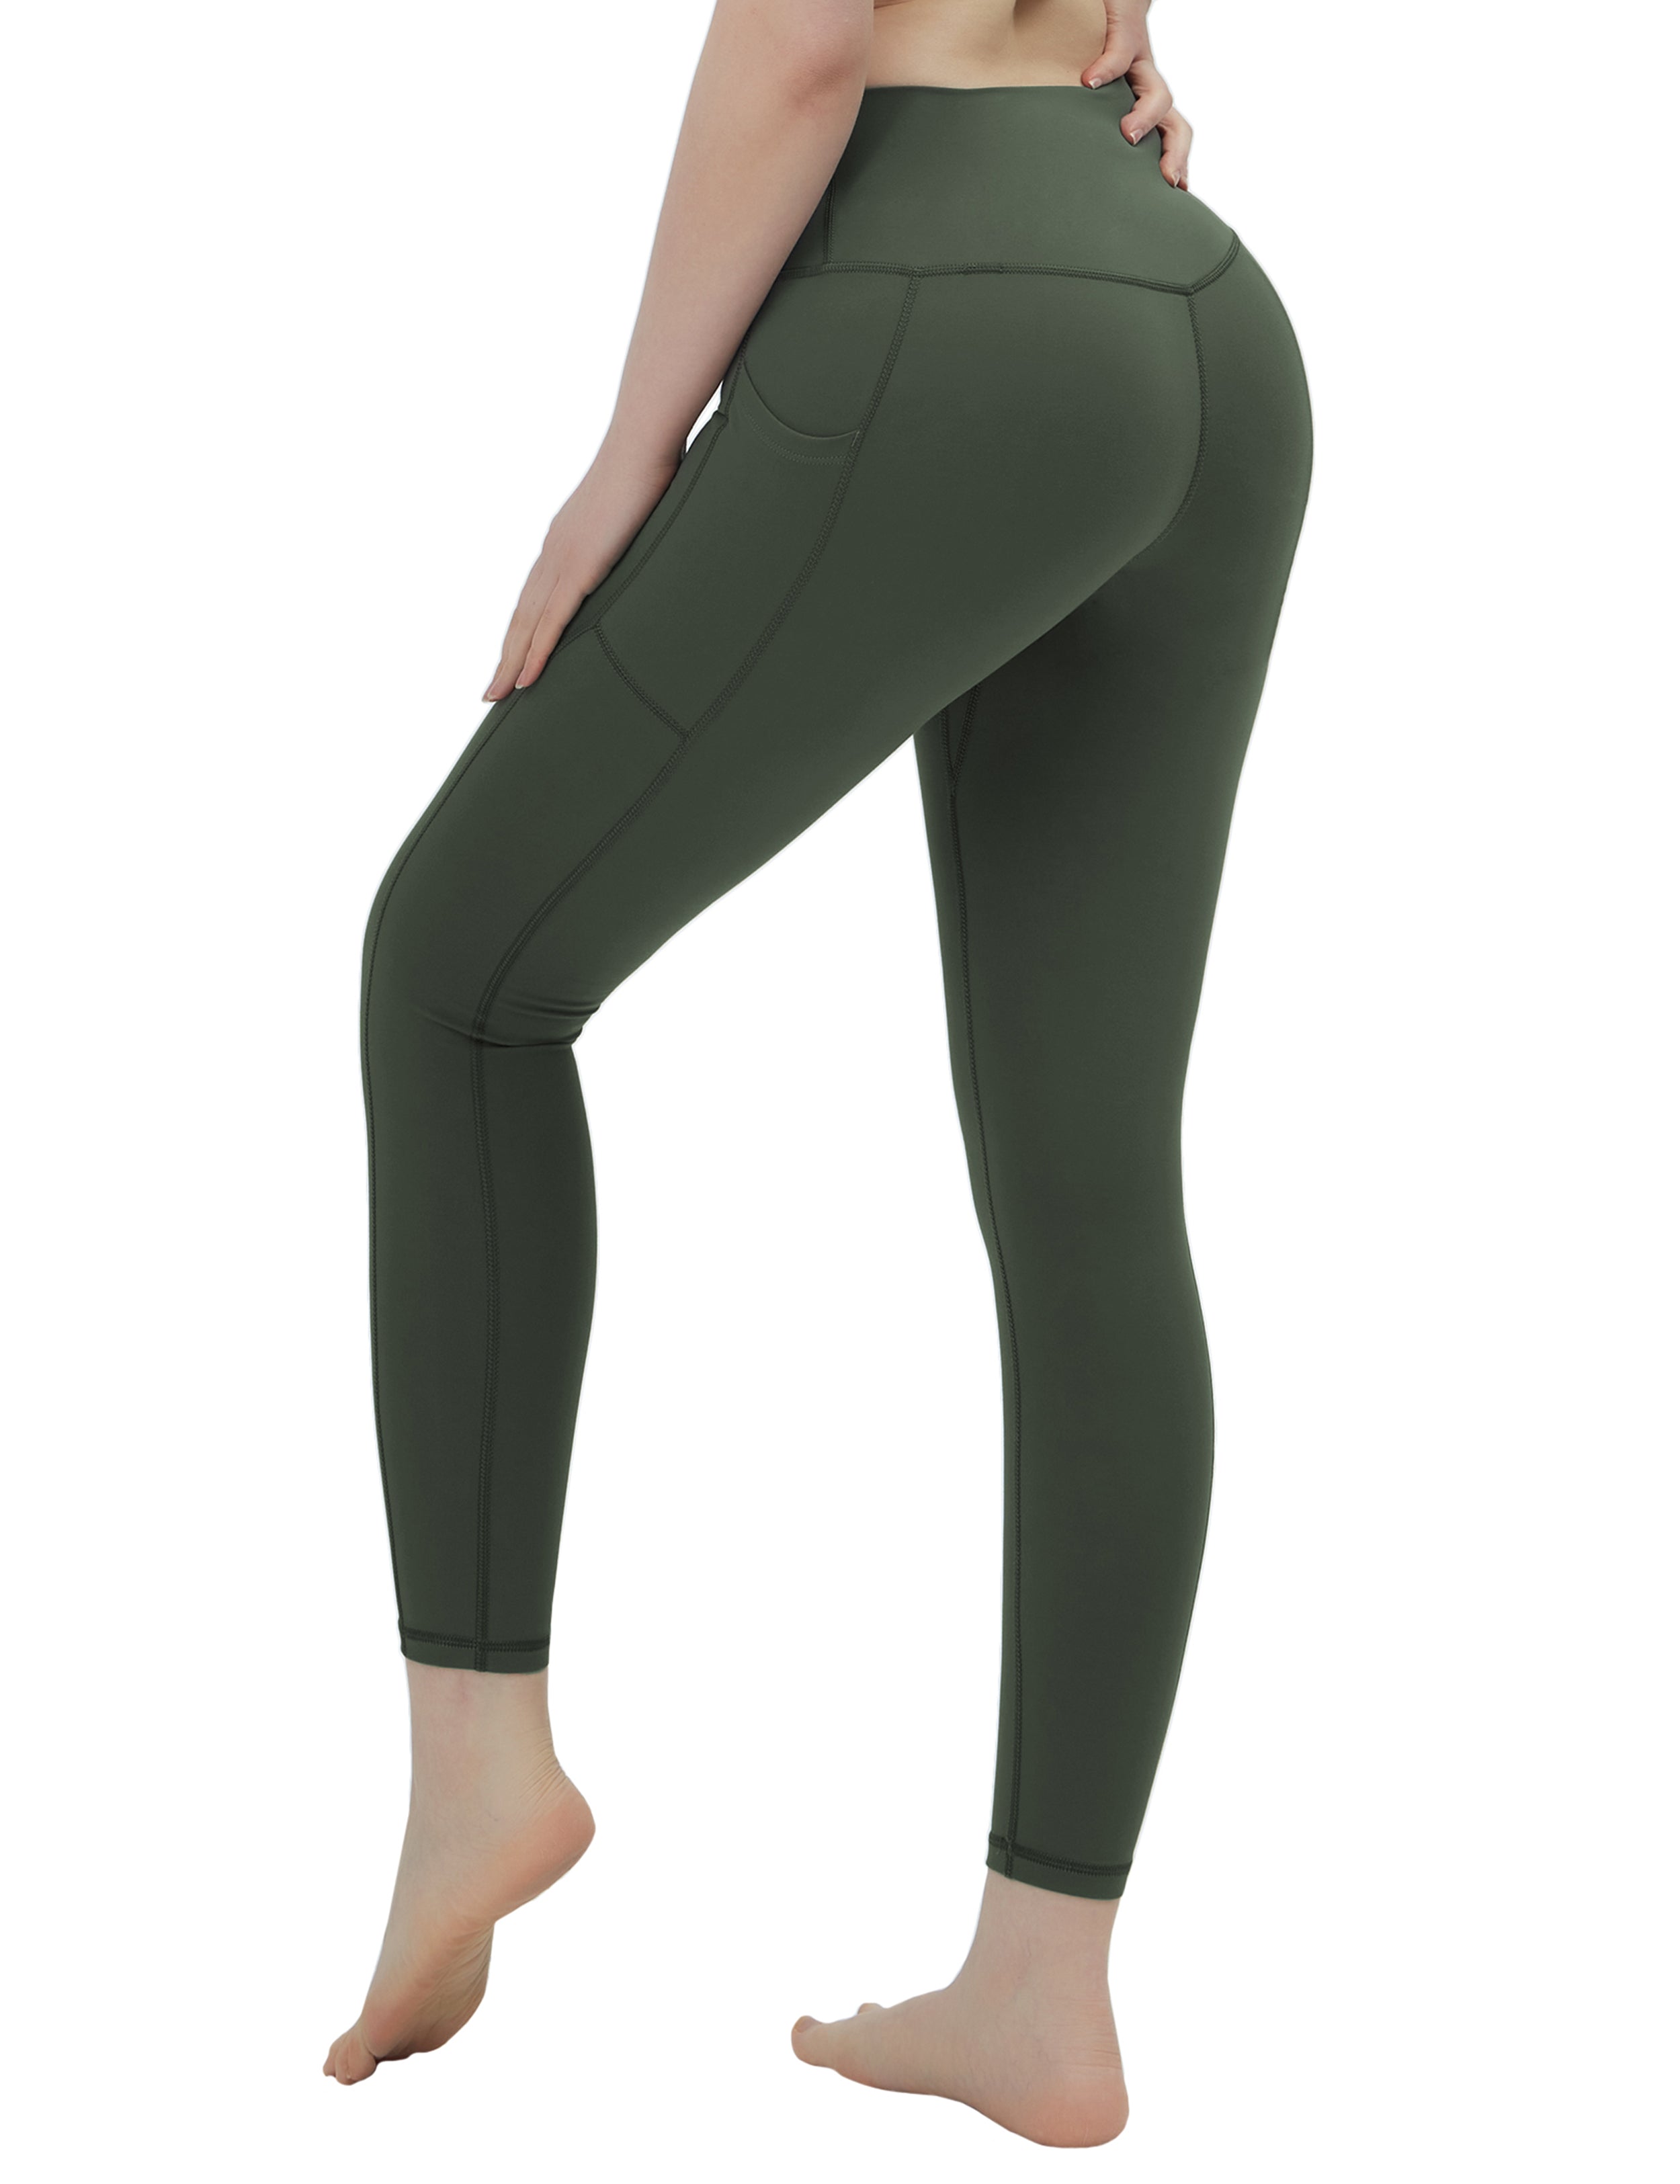 Women's High Waist Yoga Pants 7/8 Length Leggings with Pockets